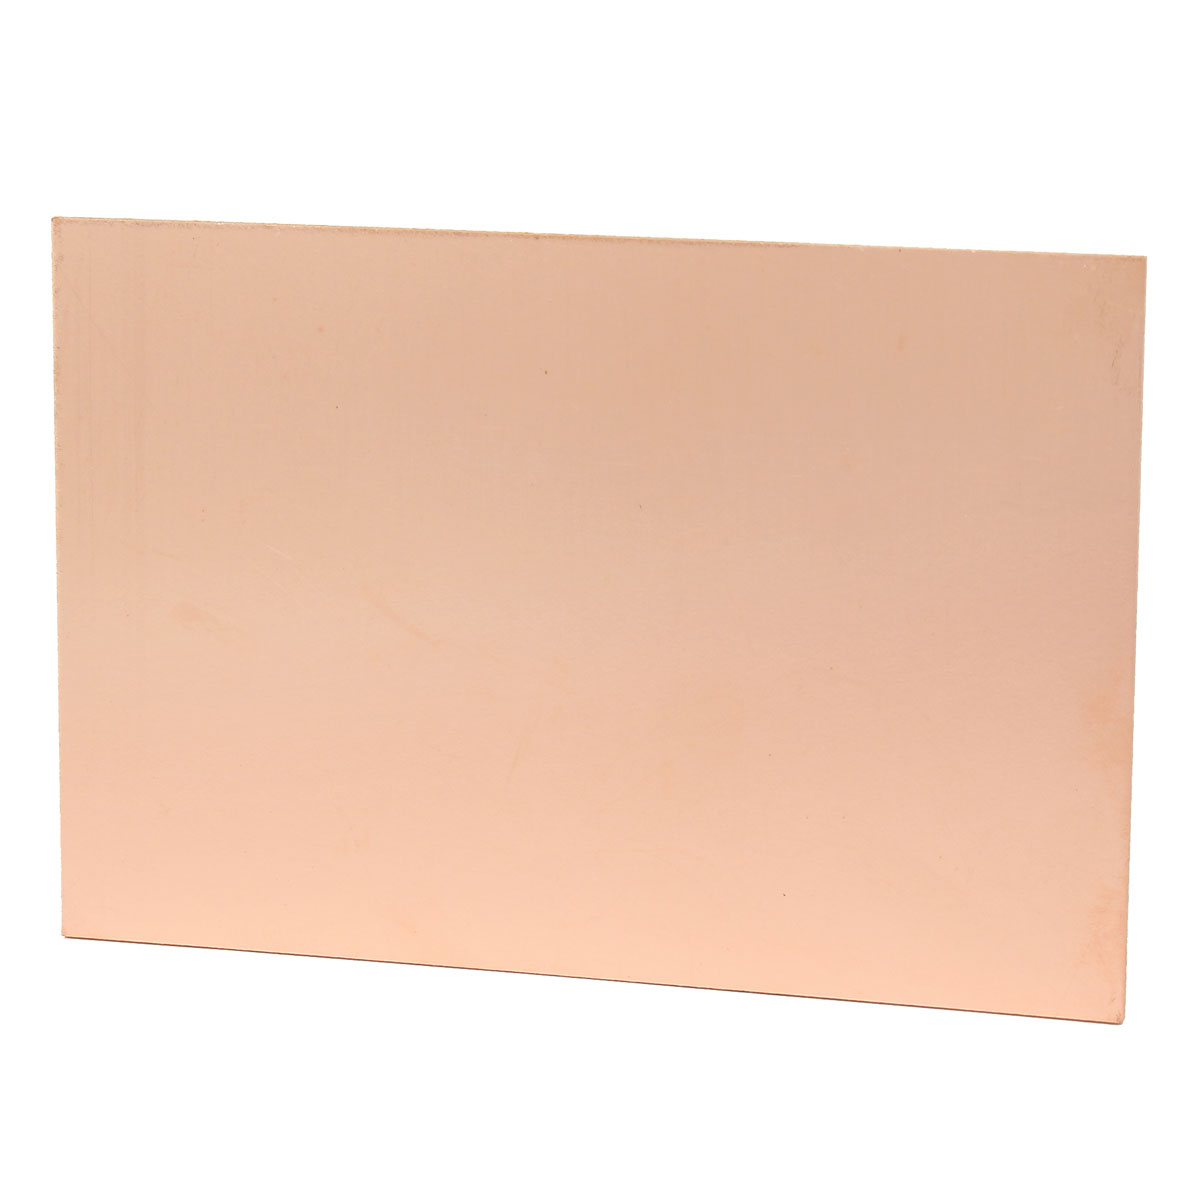 FR4 150x100mm Single Side Copper Clad Laminate PCB Board Fiberboard CCL